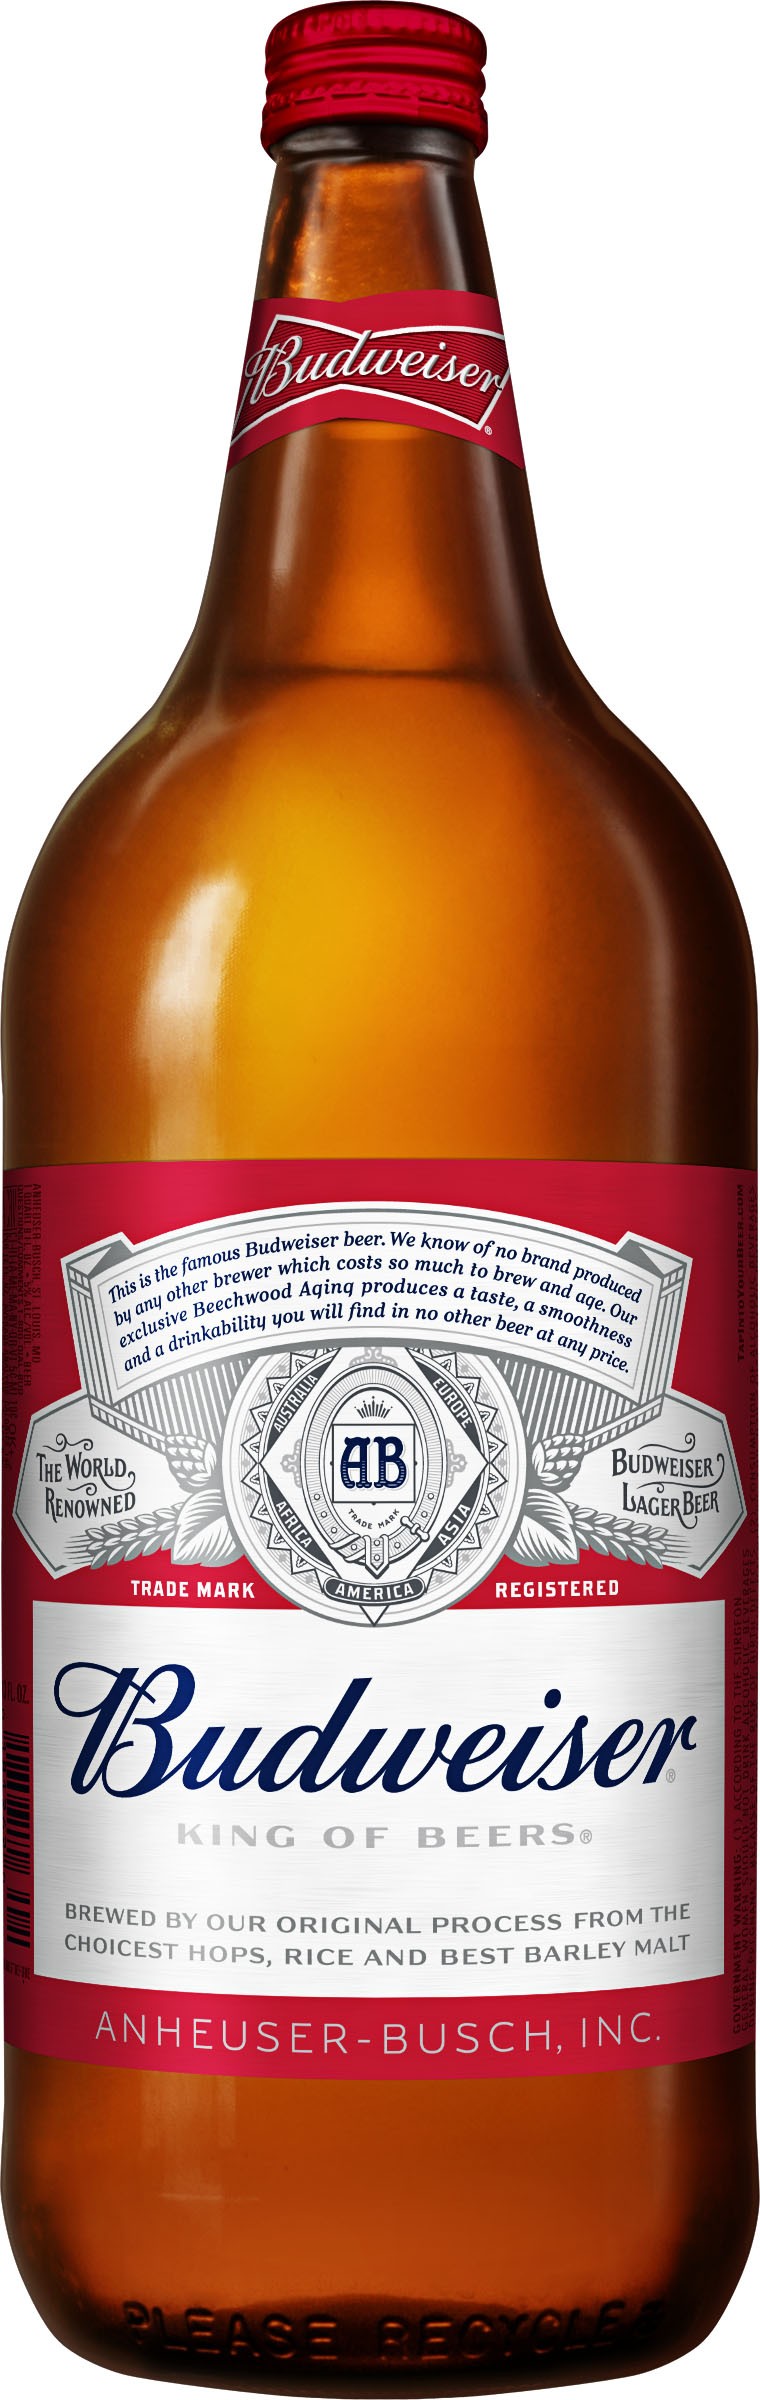 Details about   NEW Official Anheuser-Busch Budweiser 12 oz Relief Beer Mug 